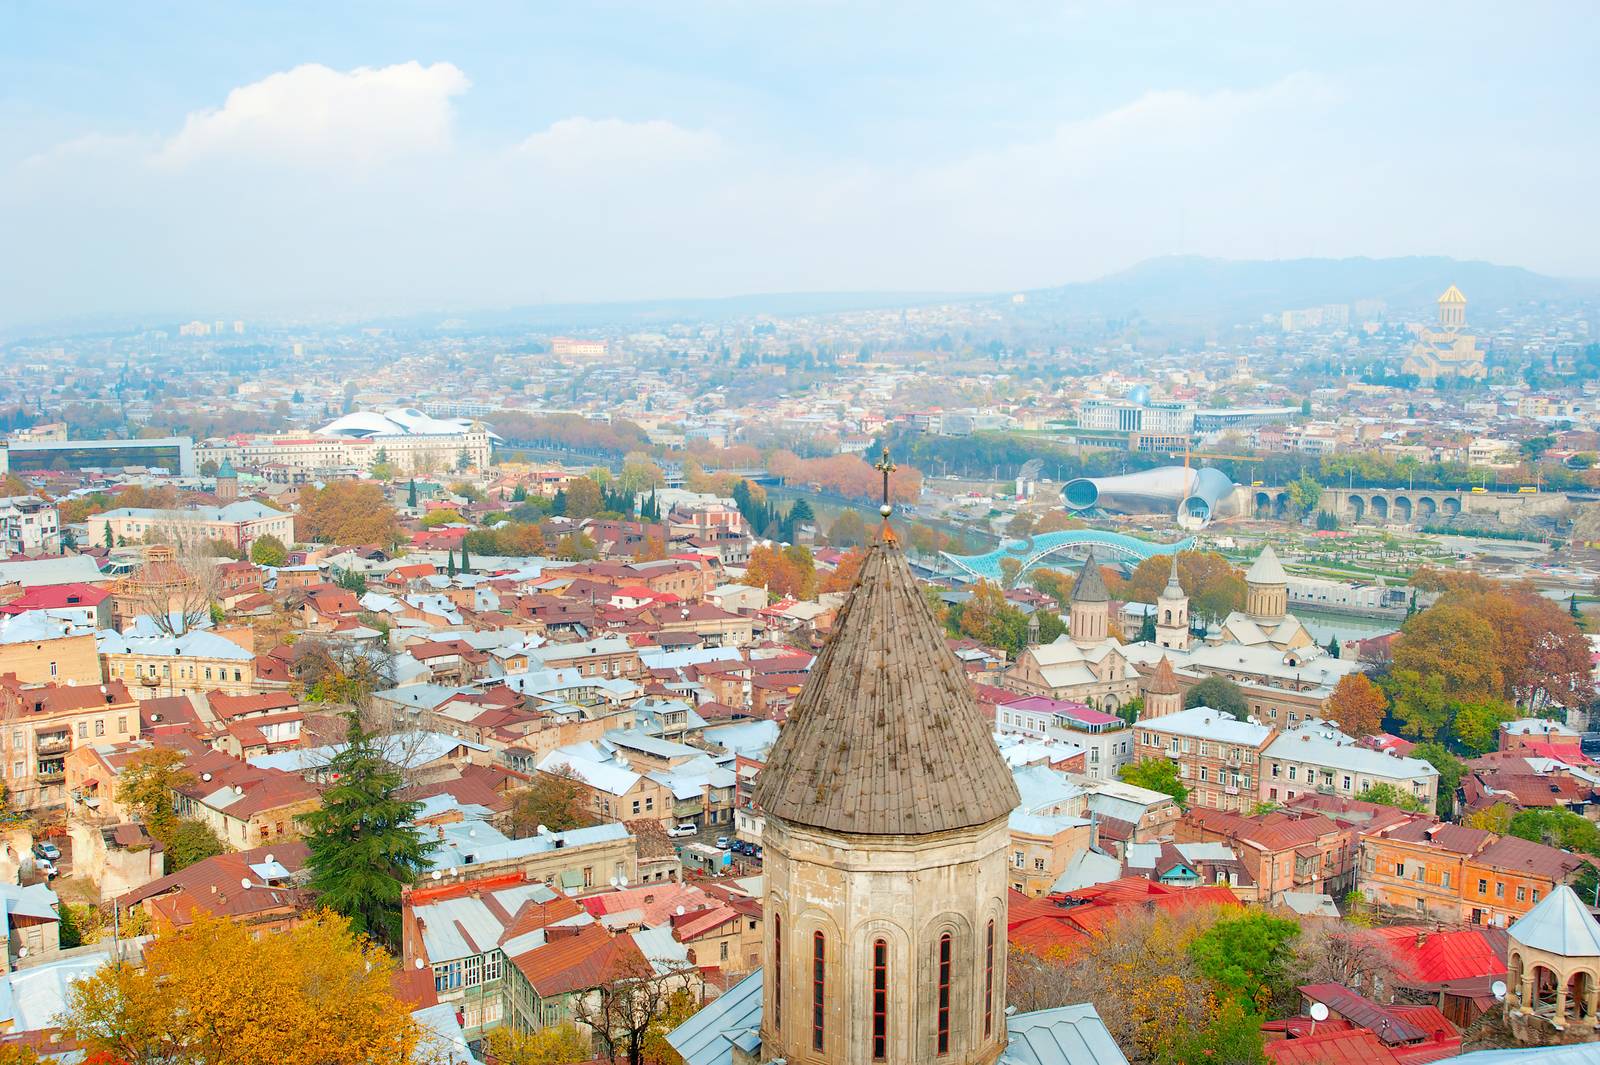 Tbilisi panorama by joyfull